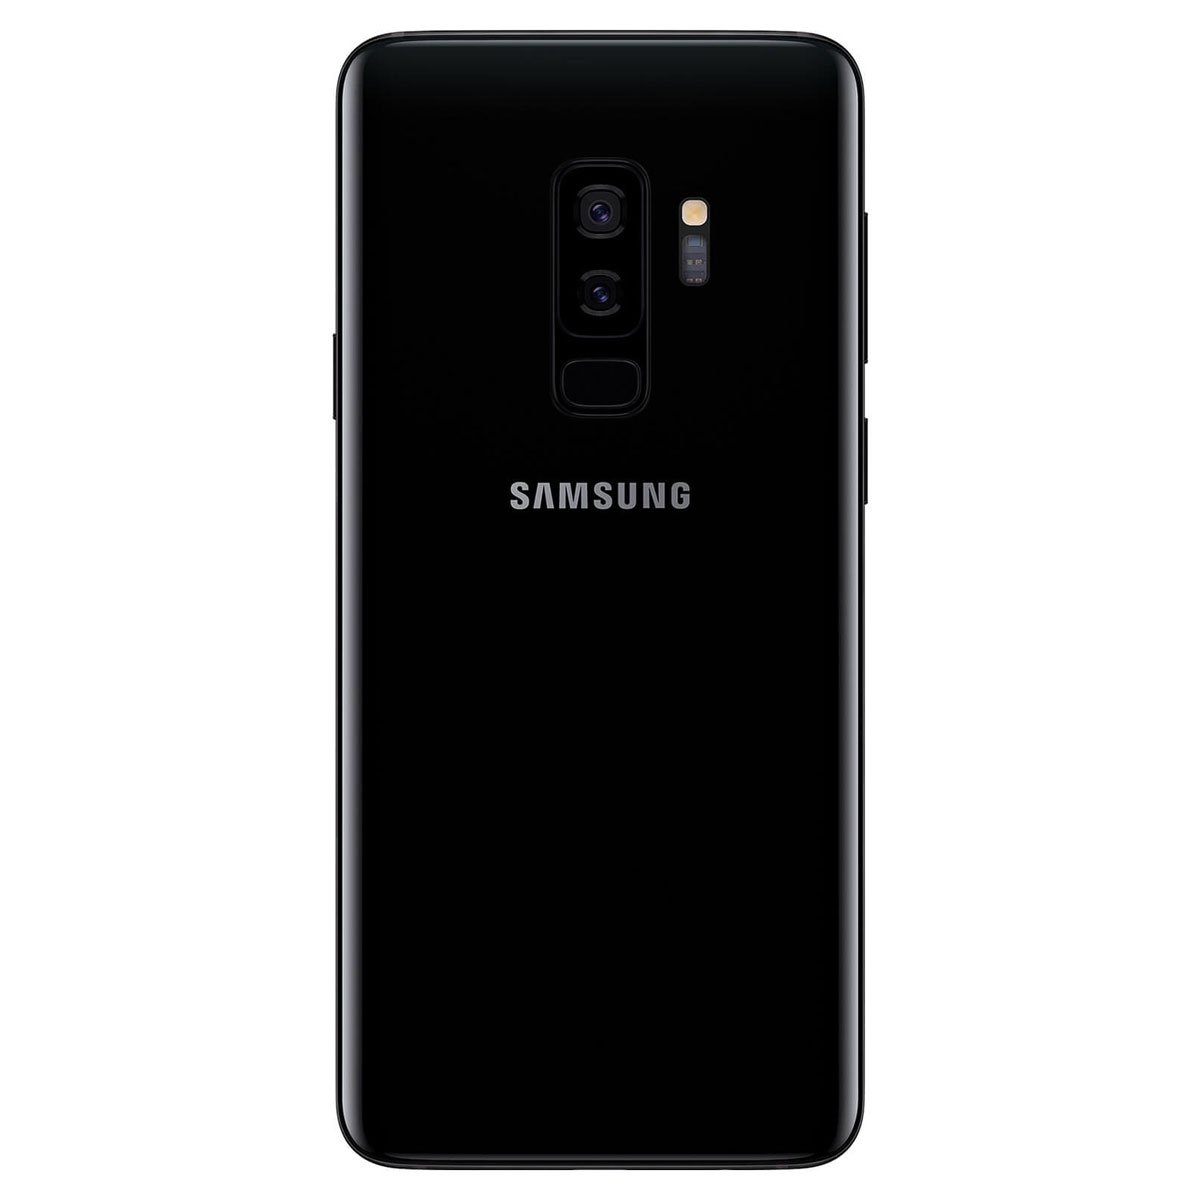 Celular Galaxy S9 Plus G9650 Negro R9 (Telcel)